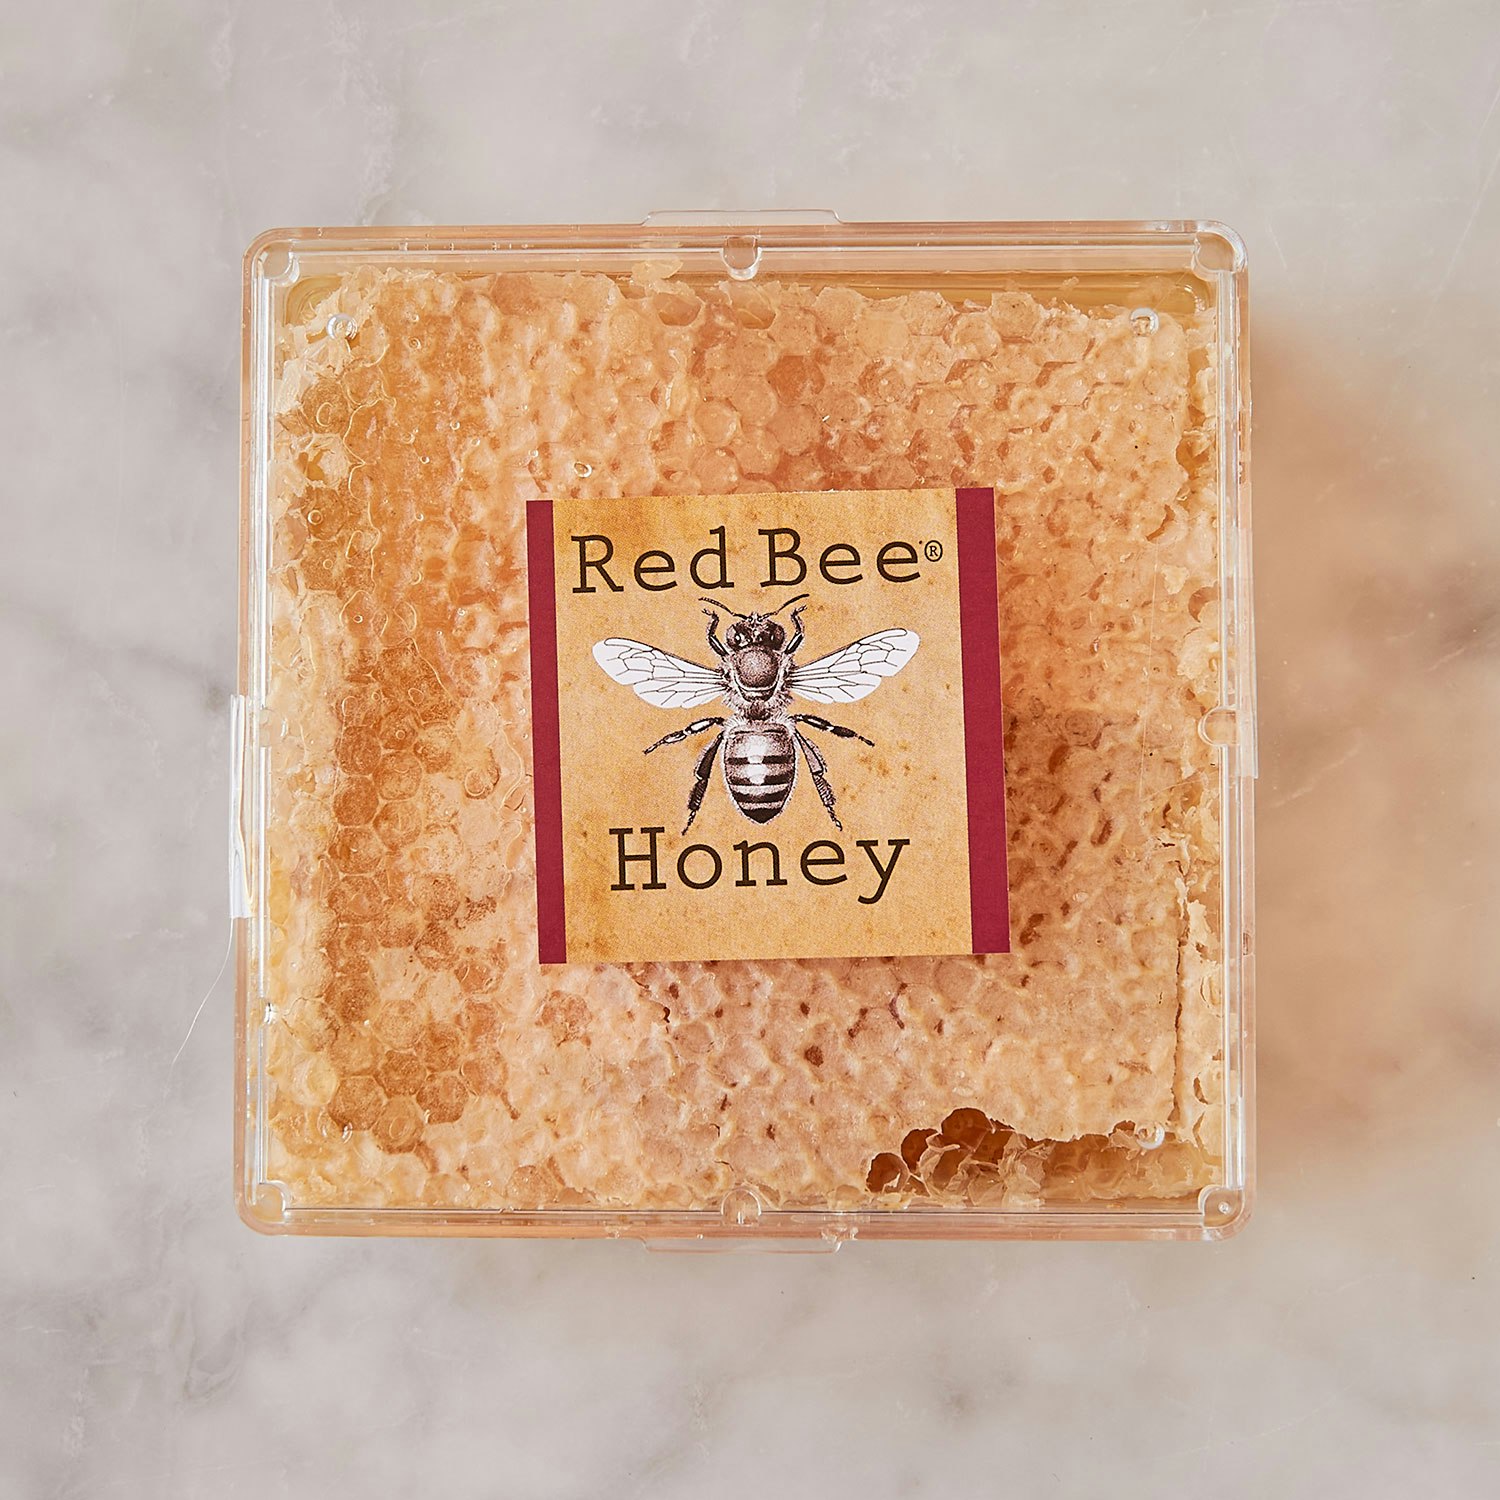 Red-Bee-Honey-Comb-Box-specialty-foods-1500-01